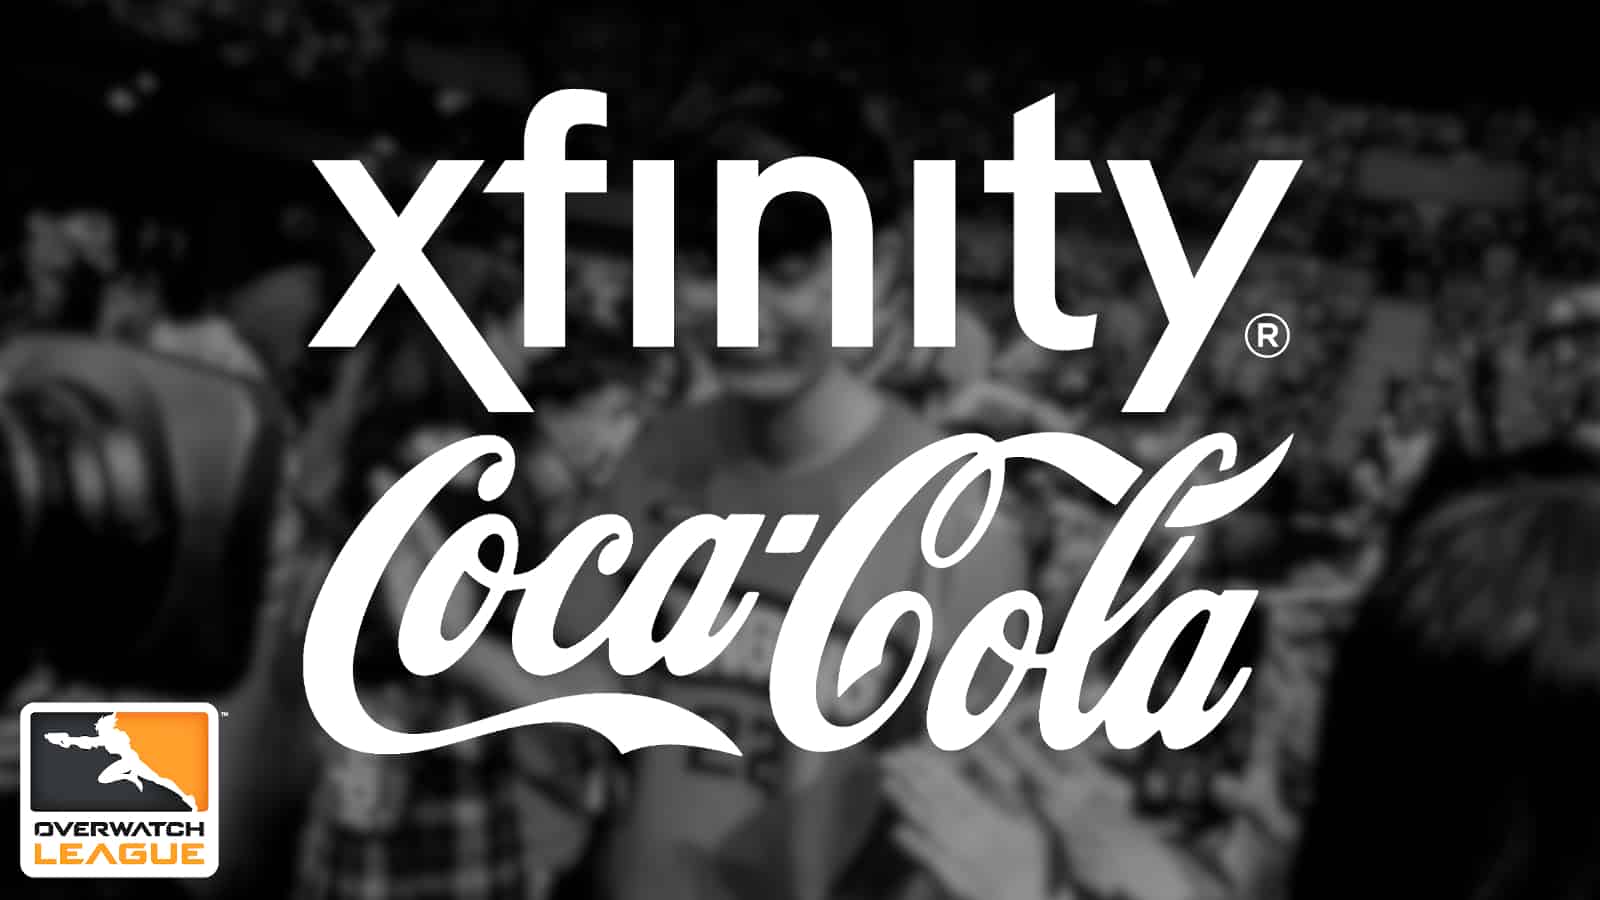 overwatch league xfinity coca cola sponsors return